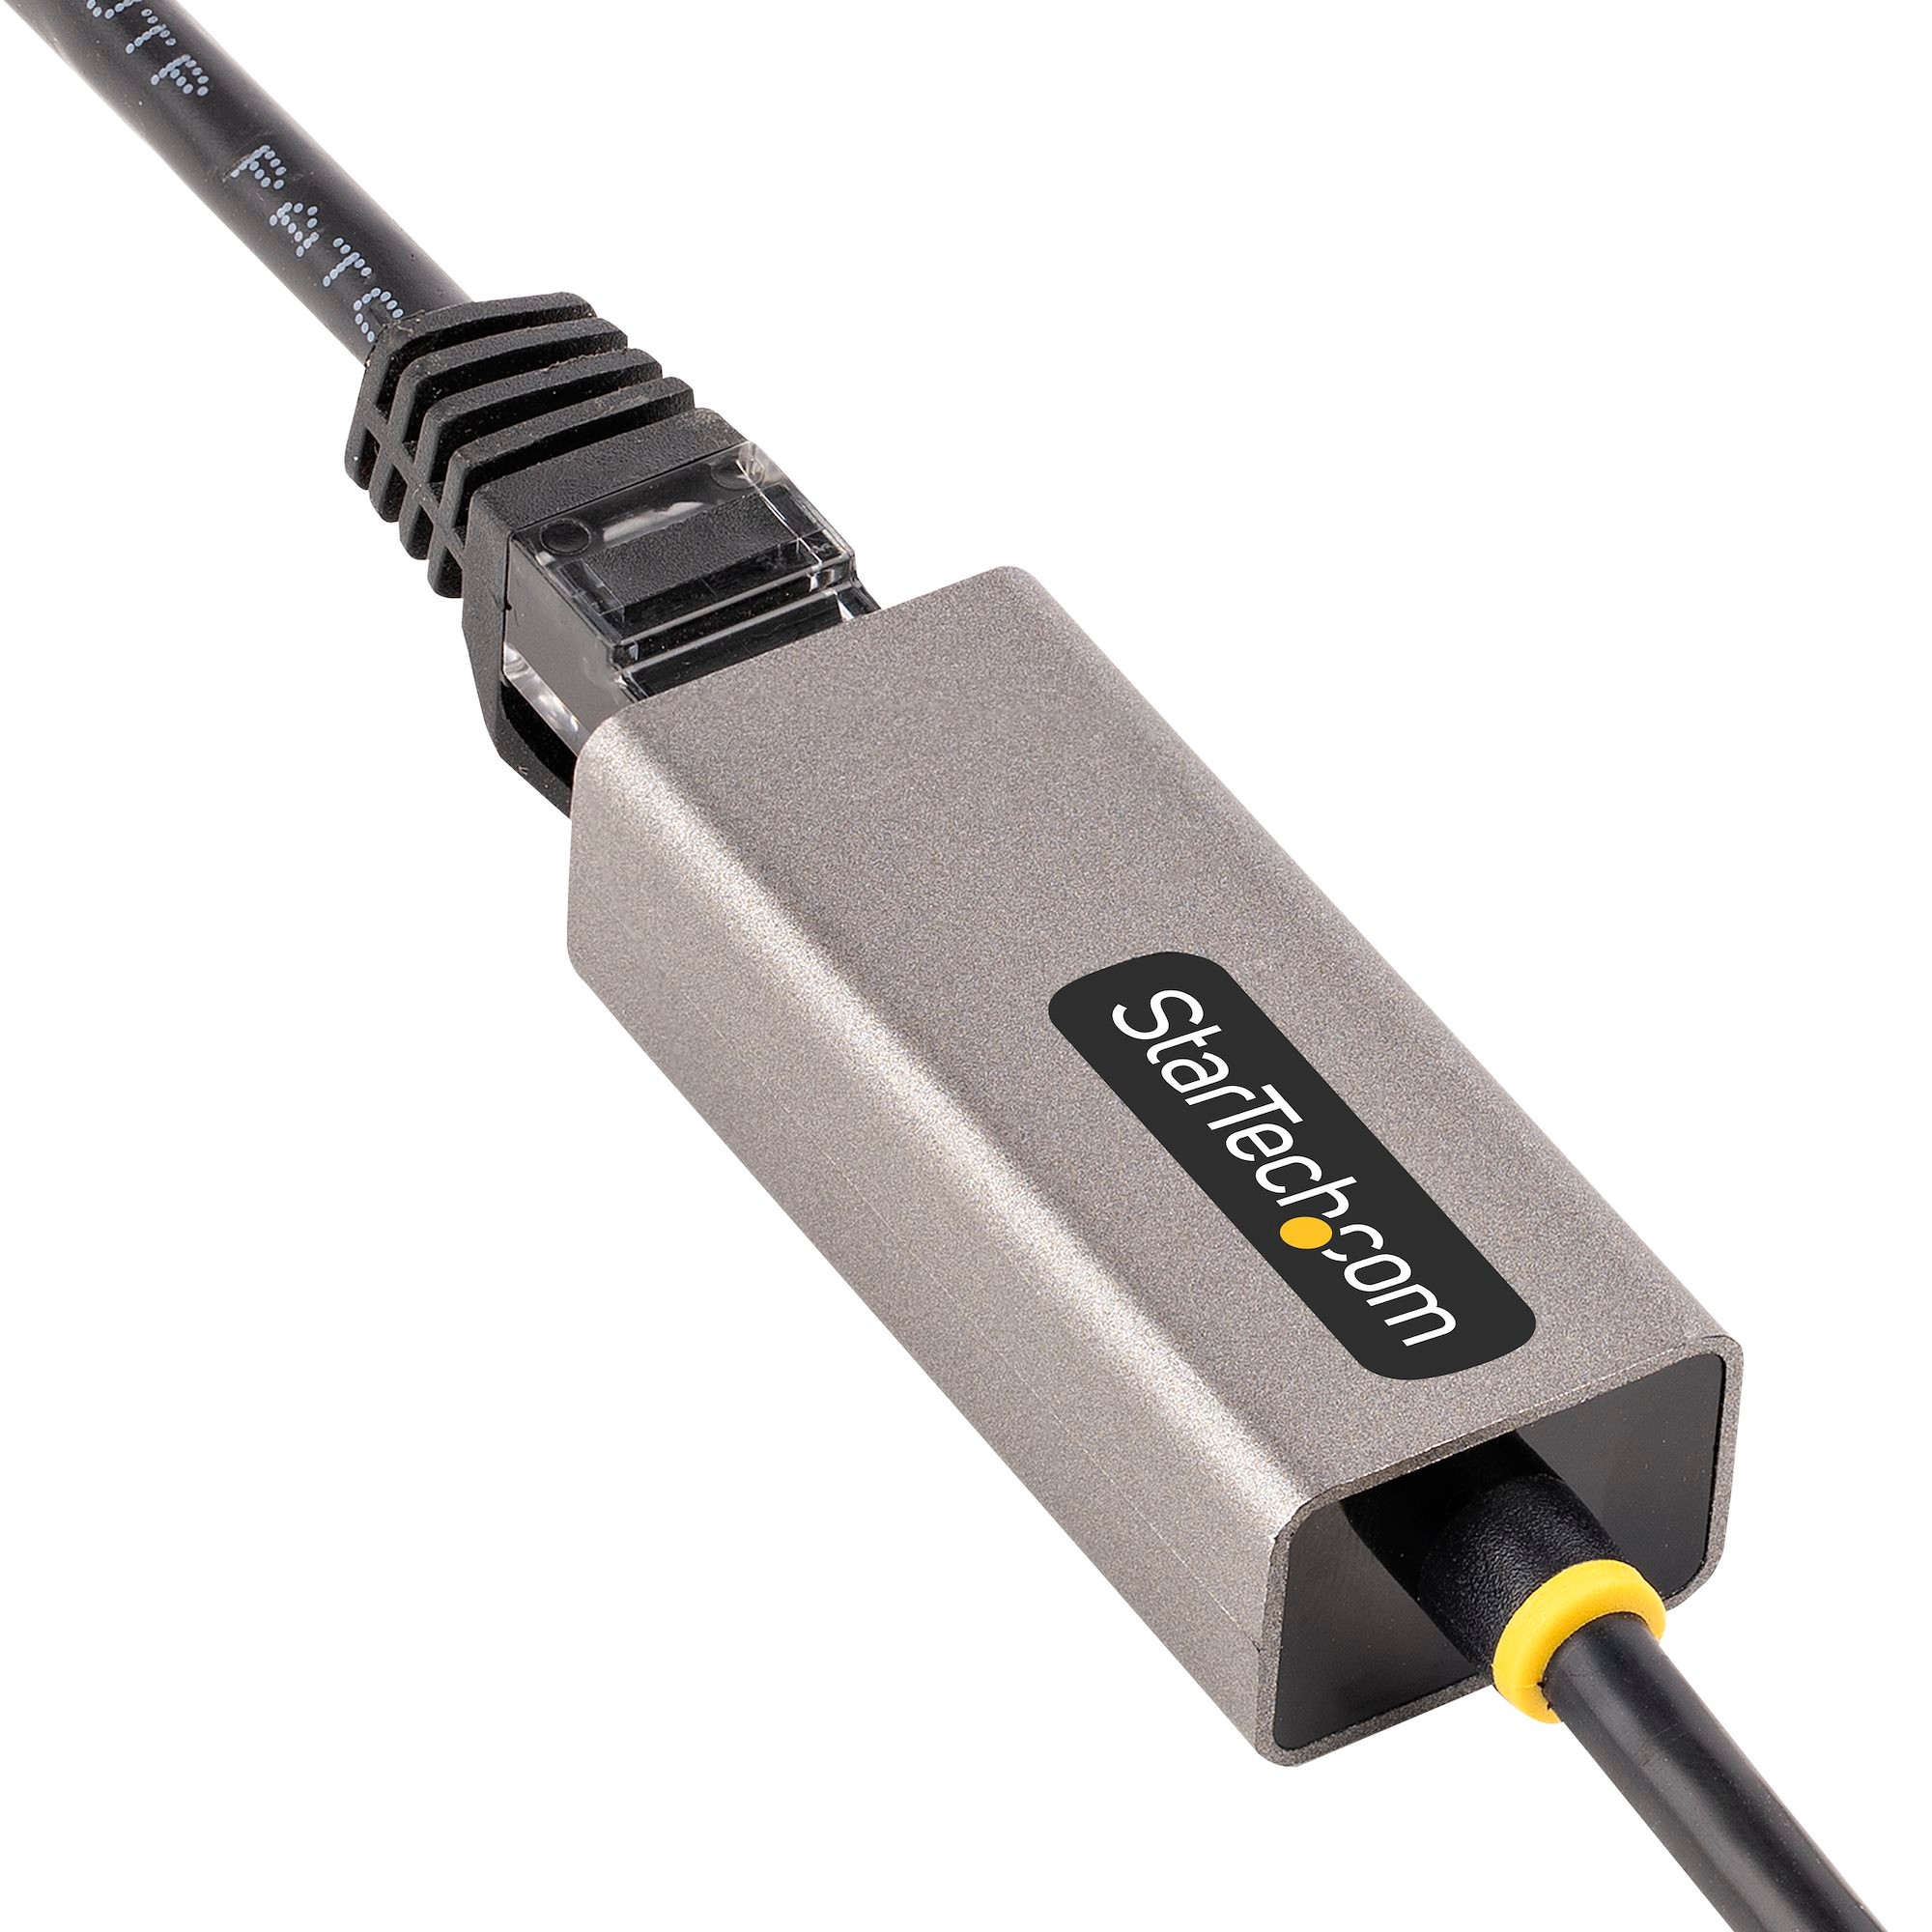 StarTech.com USB Bluetooth 5.0 Adapter, USB Bluetooth Dongle Receiver for PC/Laptop,  Range 33ft/10m - USBA-BLUETOOTH-V5-C2 - Wireless Adapters 